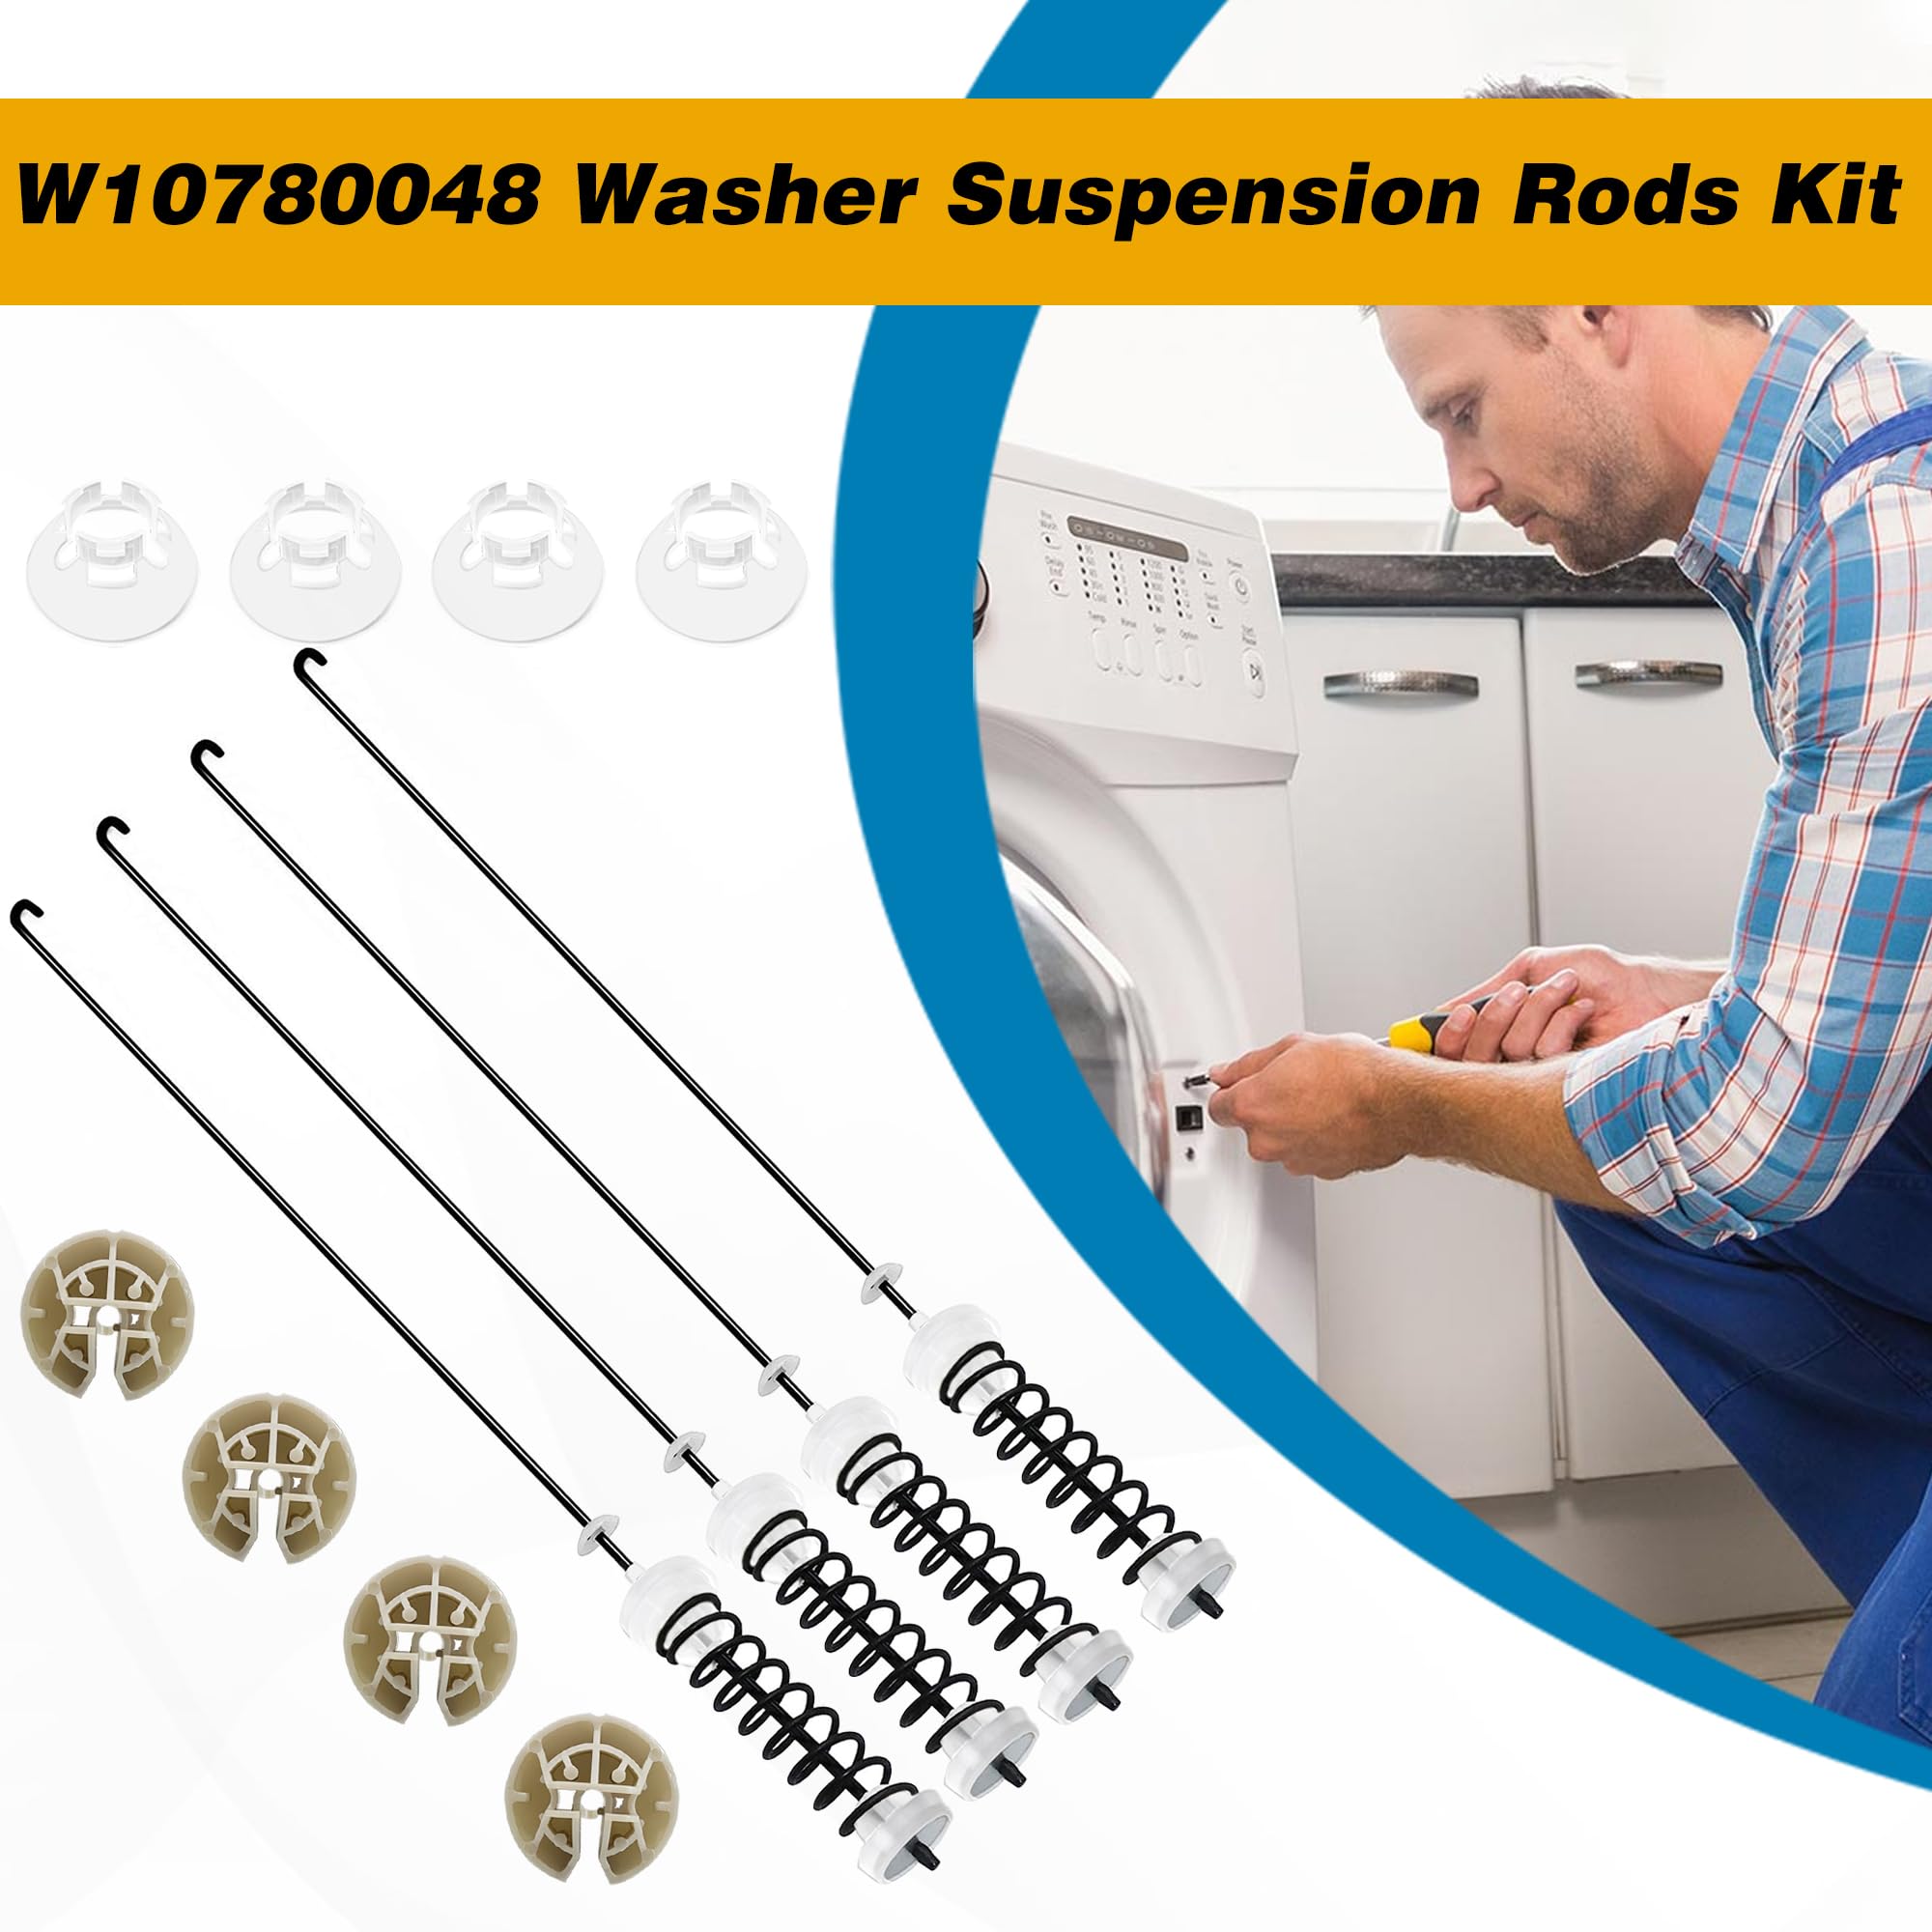 W10780048 Washing Machine Suspension Rods Kit (4 PCS) for Whirlpool Washer